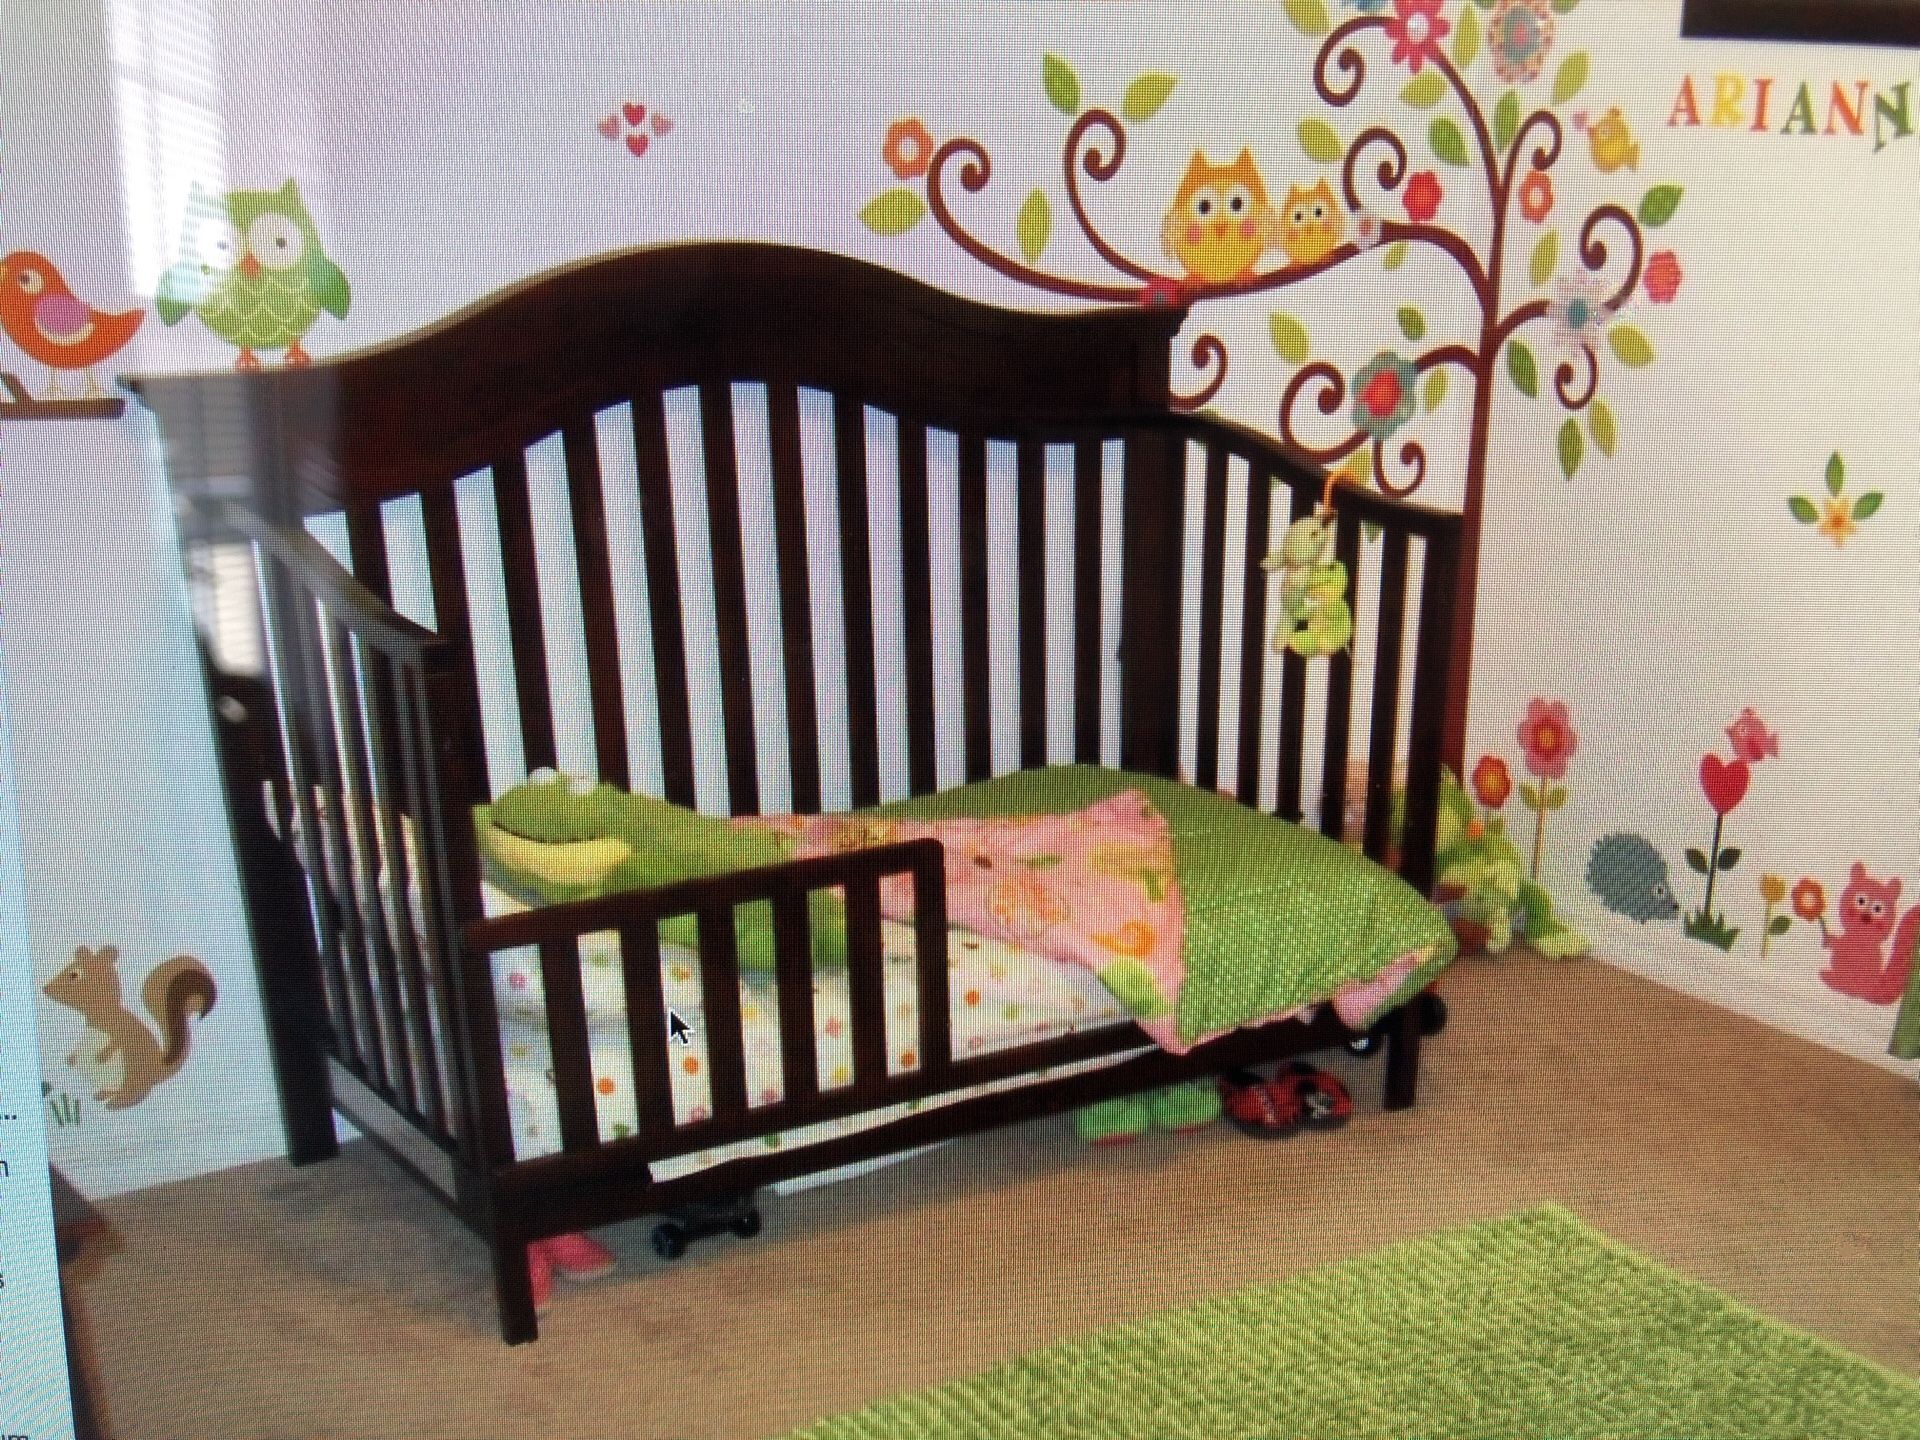 Savana Tori baby bedroom set w/ convertible crib